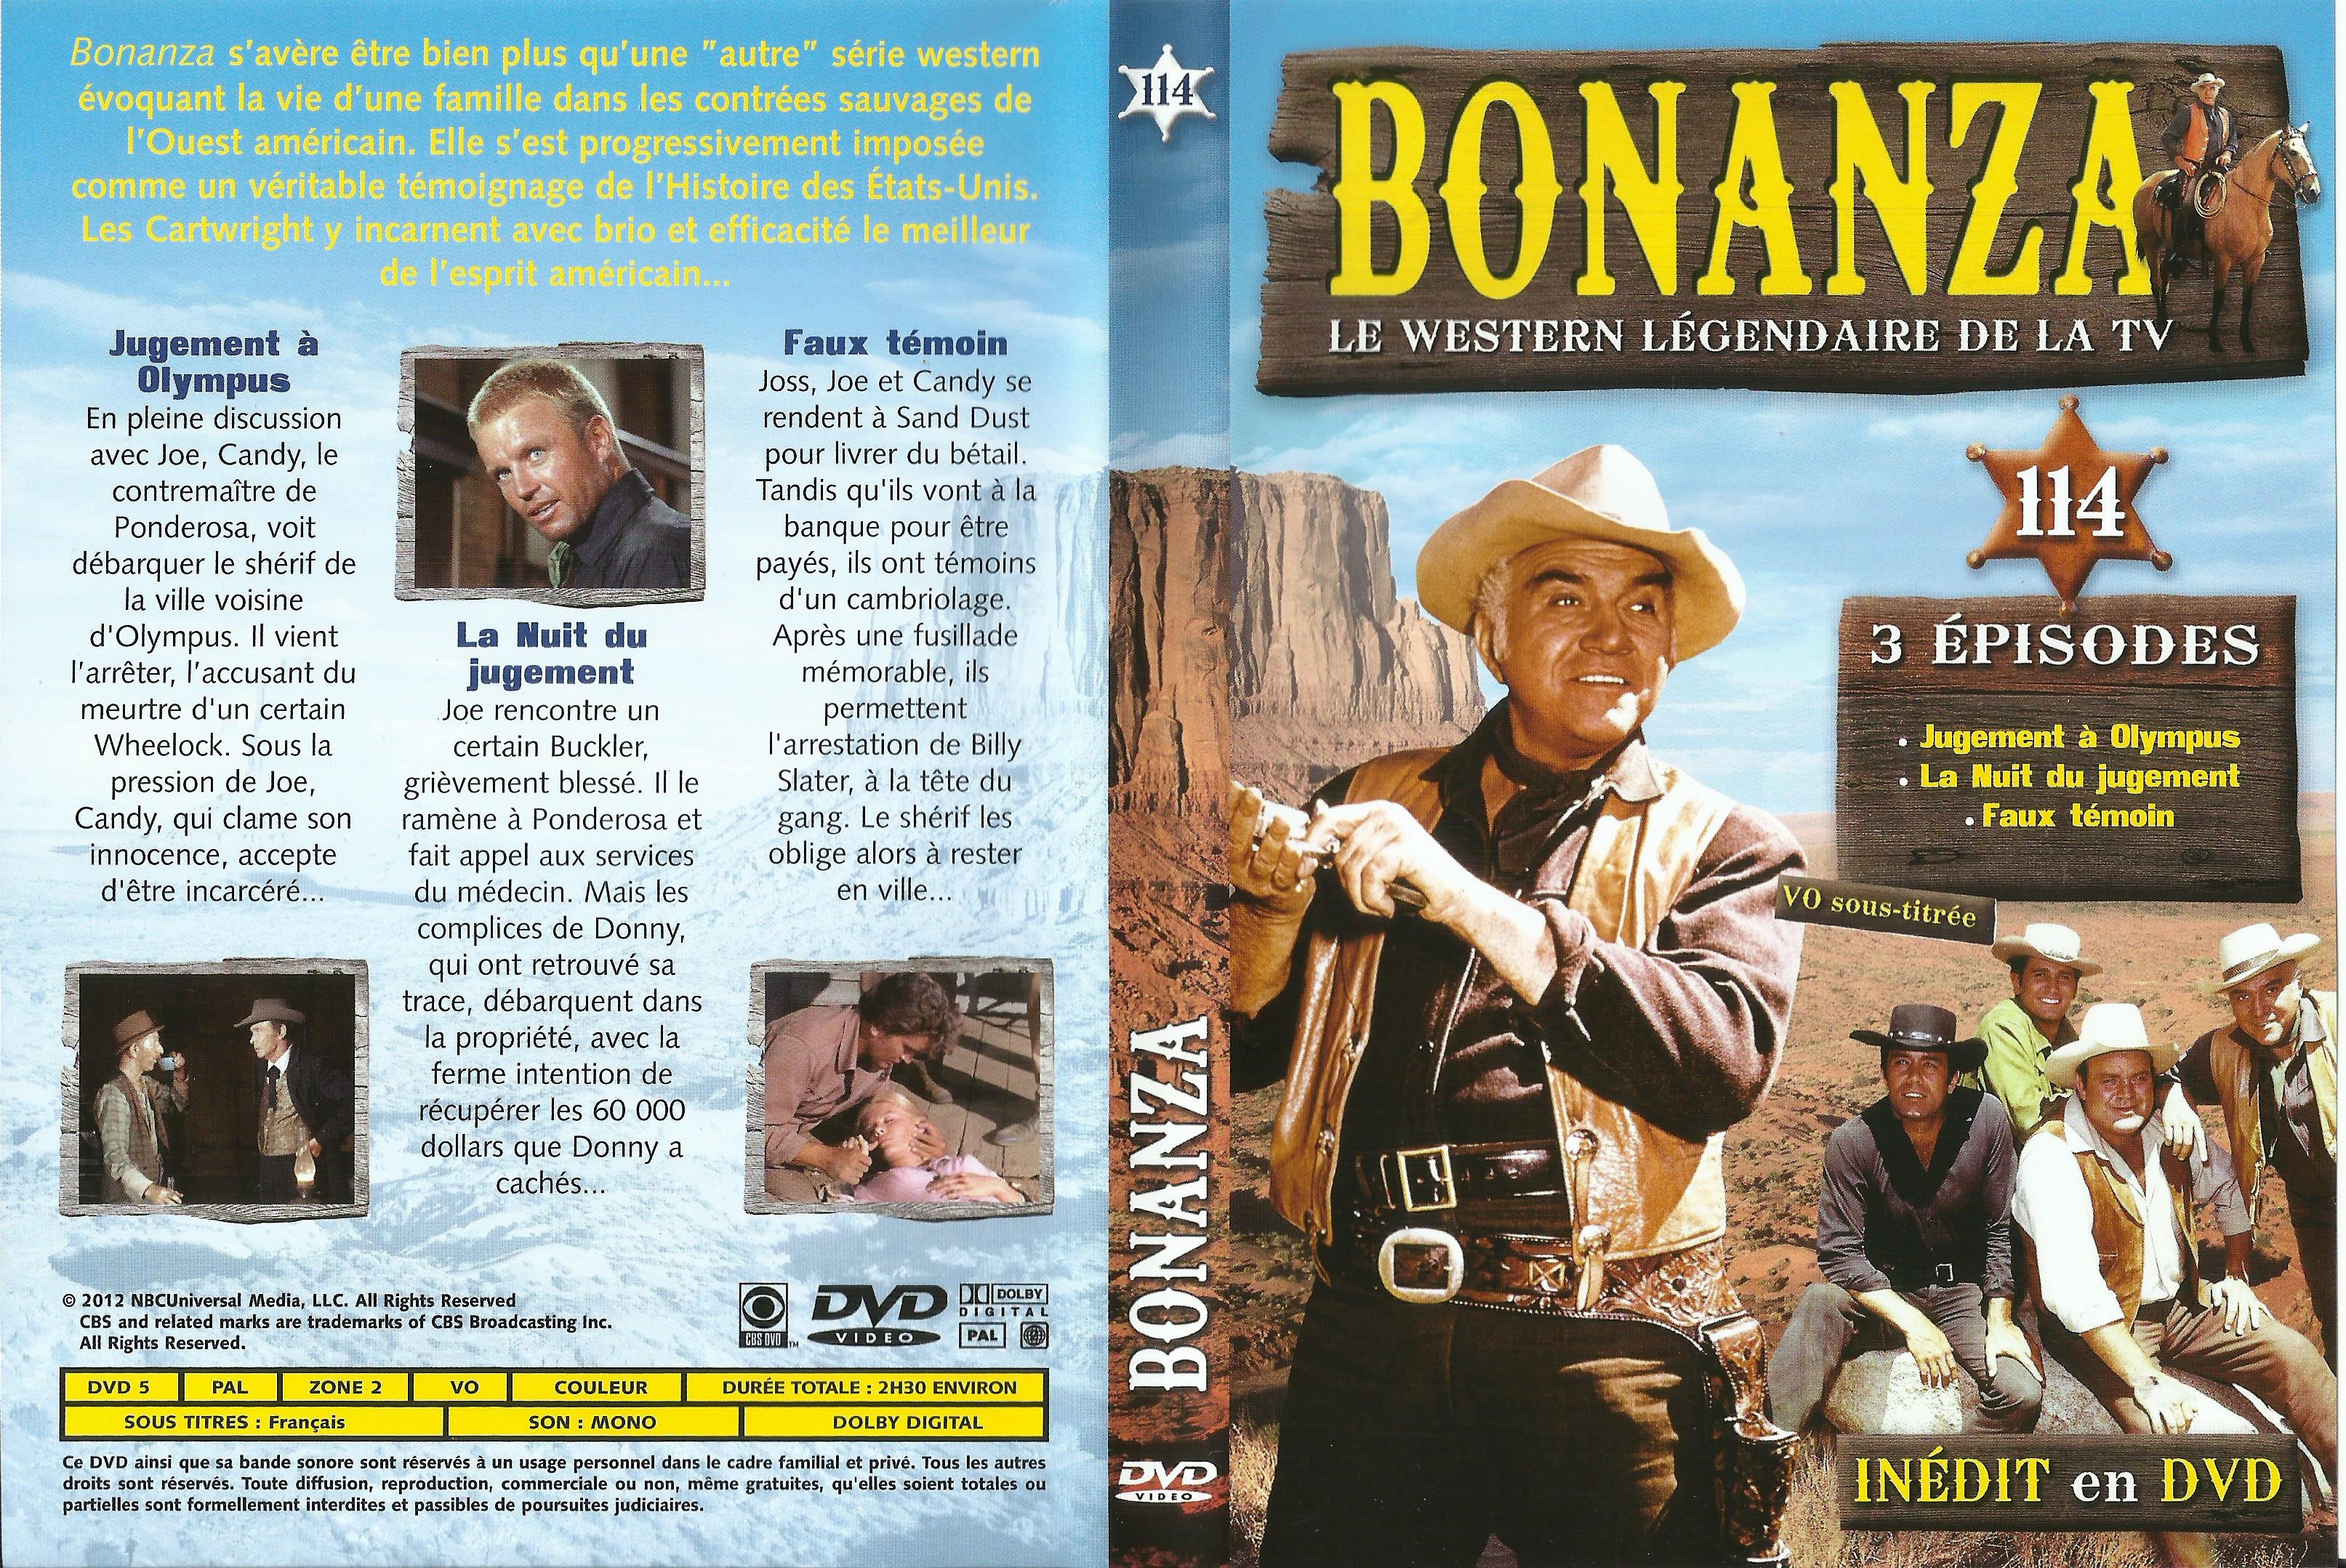 Jaquette DVD Bonanza vol 114